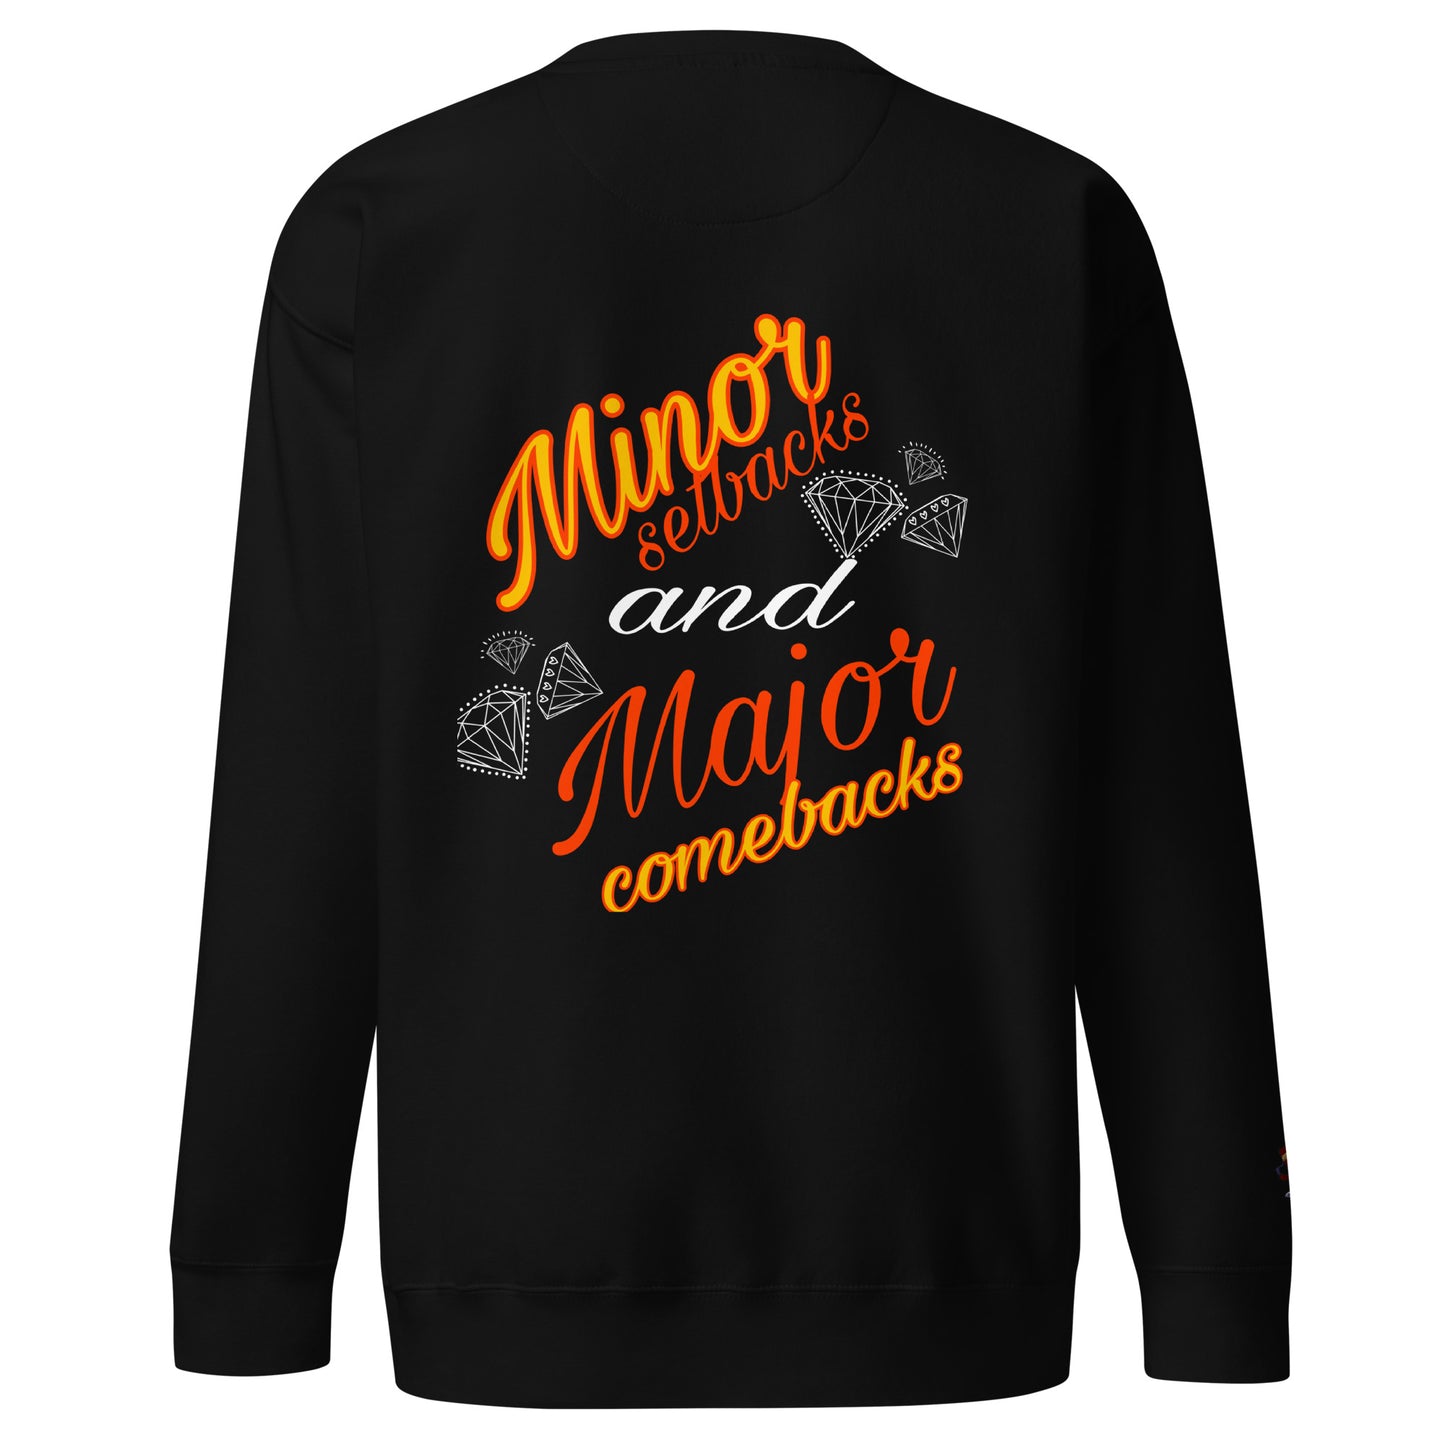 Major comebacks Premium Sweatshirt